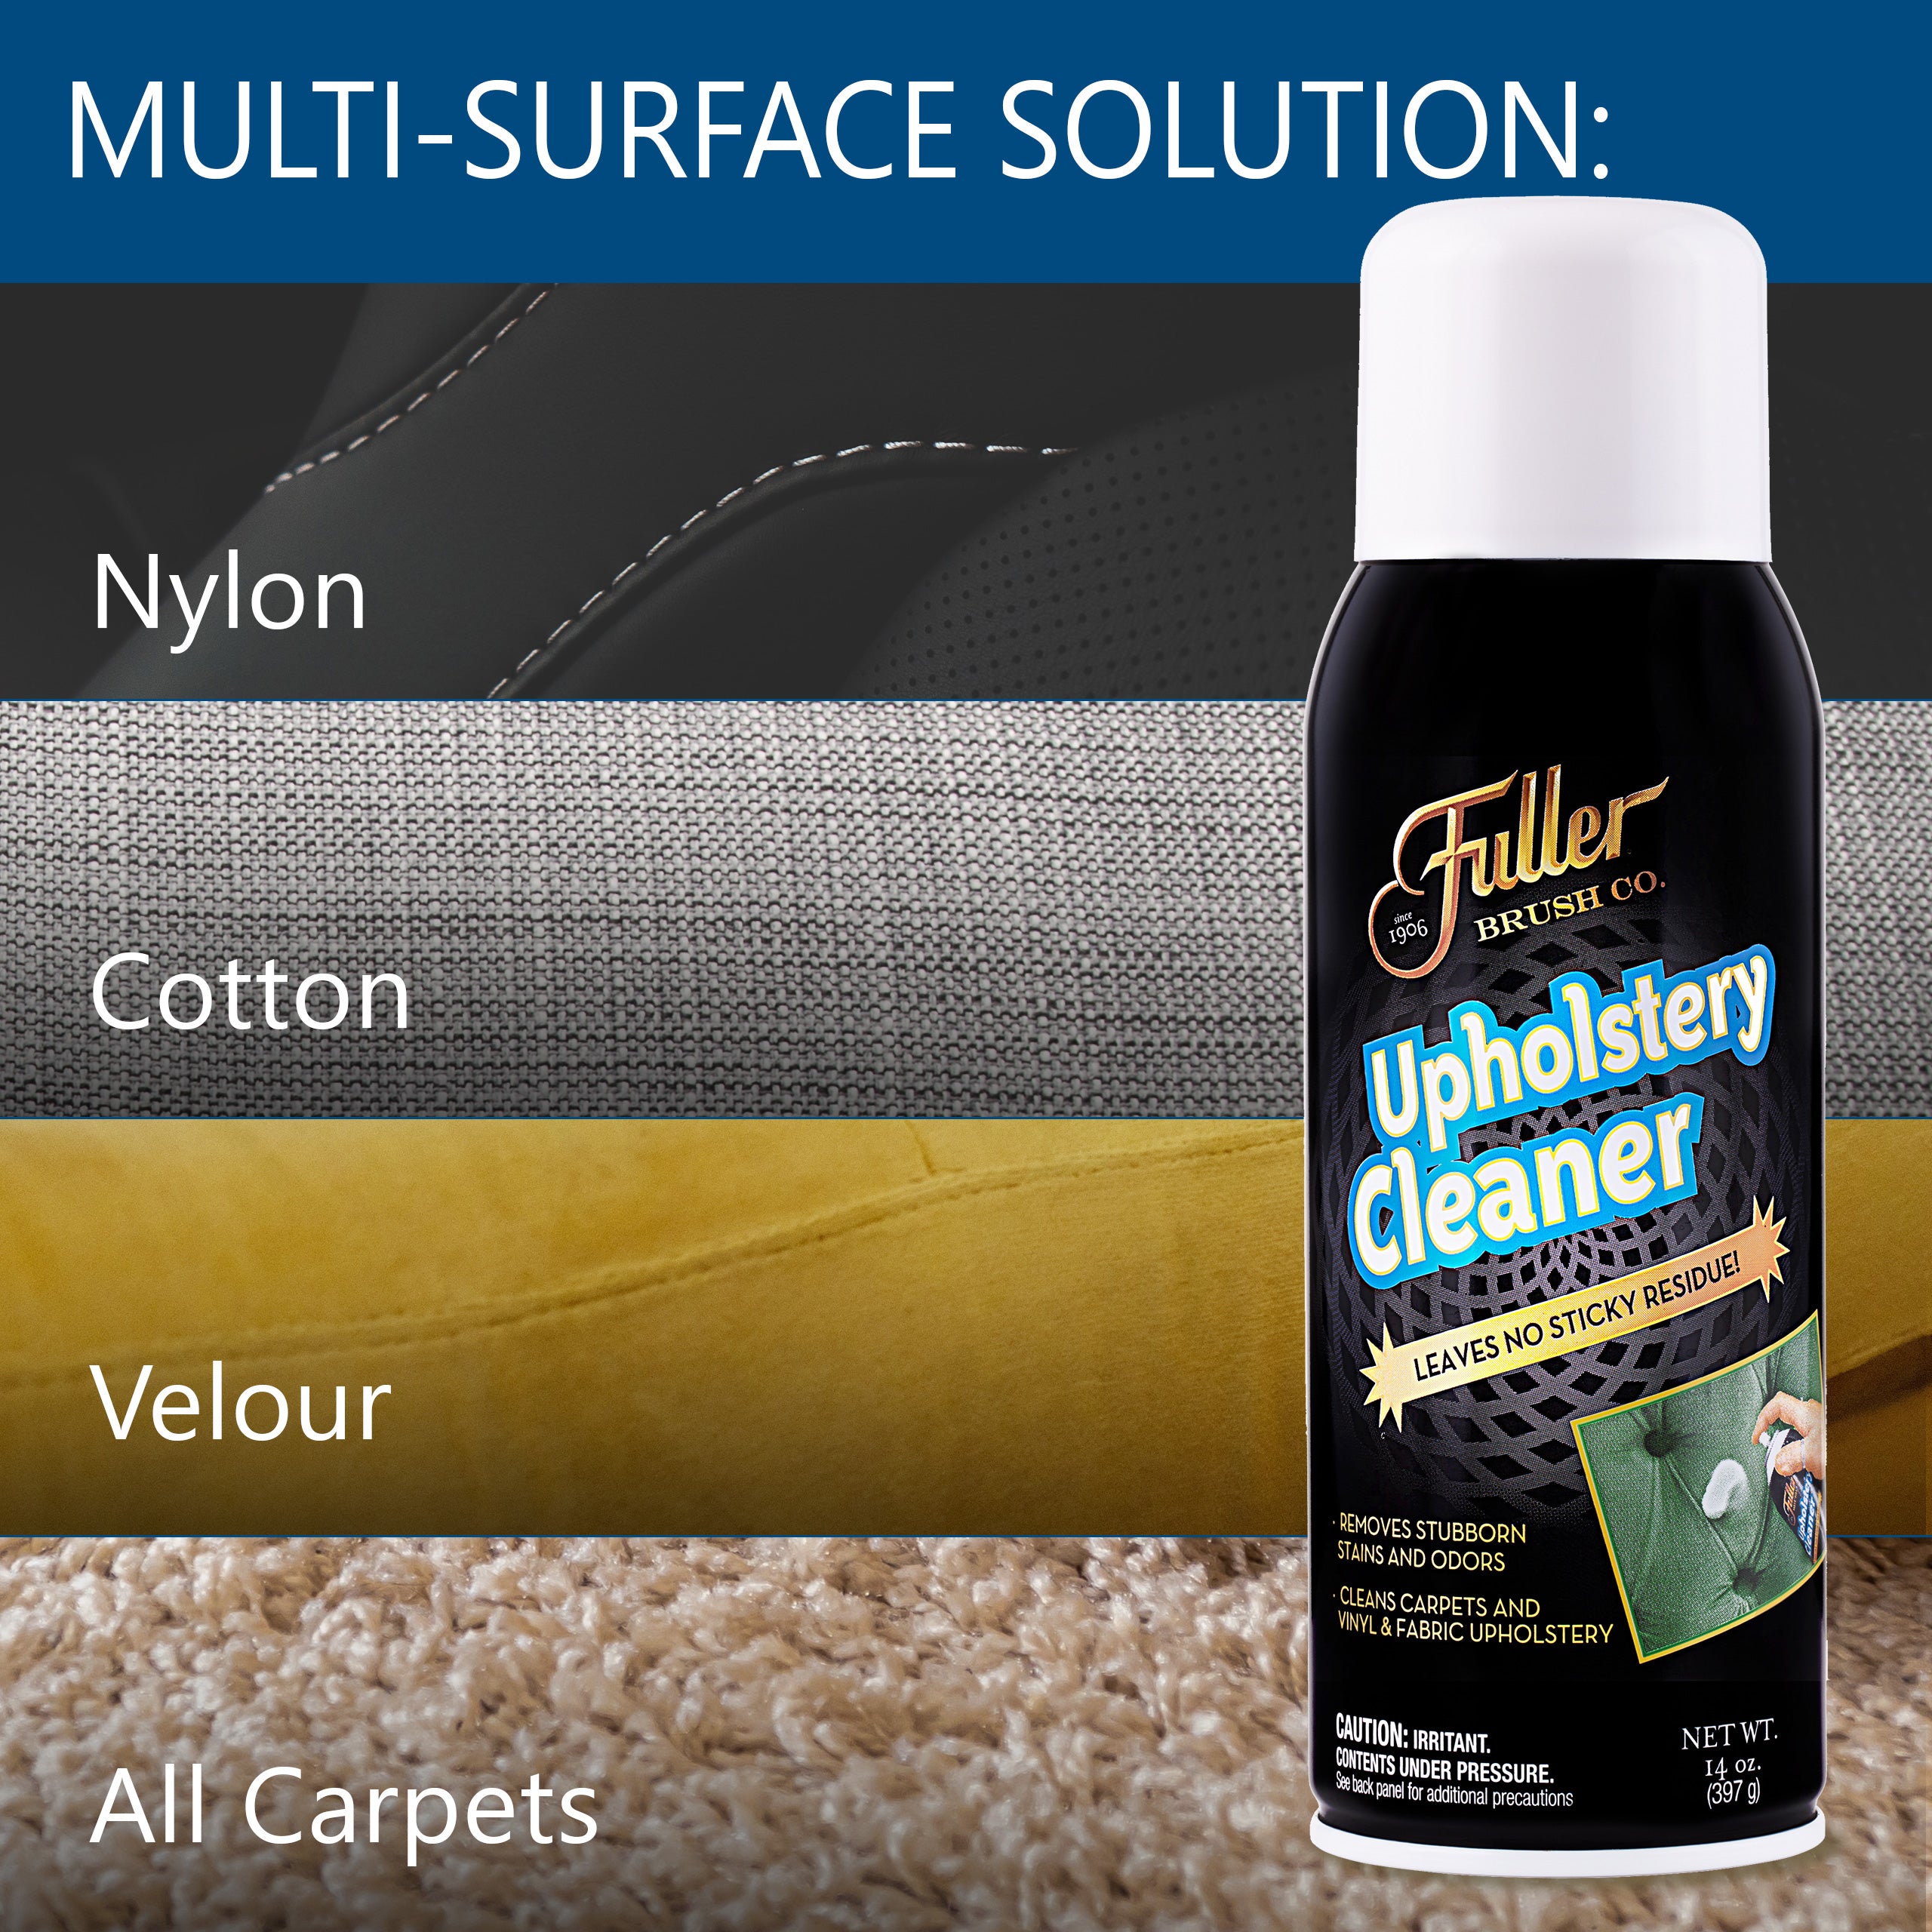 Upholstery & Carpet Cleaning Spray & Deodorizer - Rich Foam Spray